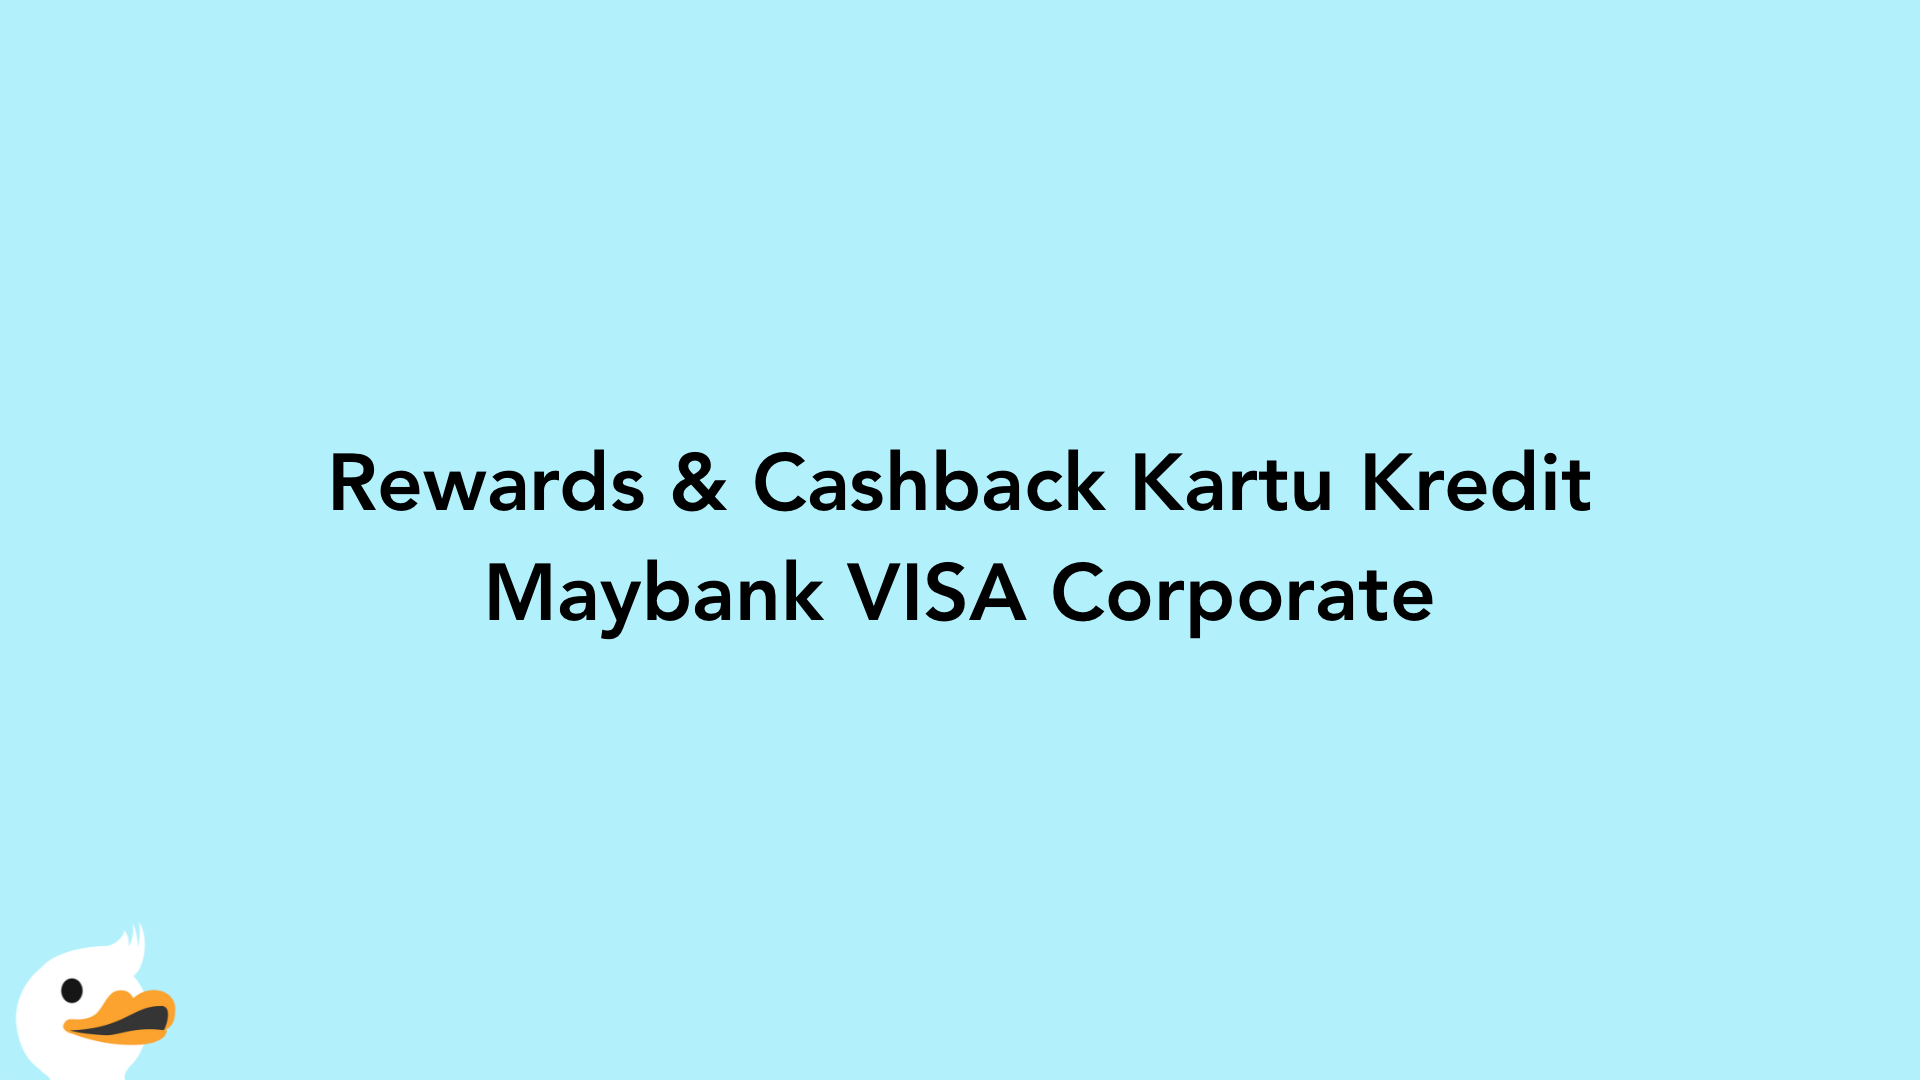 Rewards & Cashback Kartu Kredit Maybank VISA Corporate